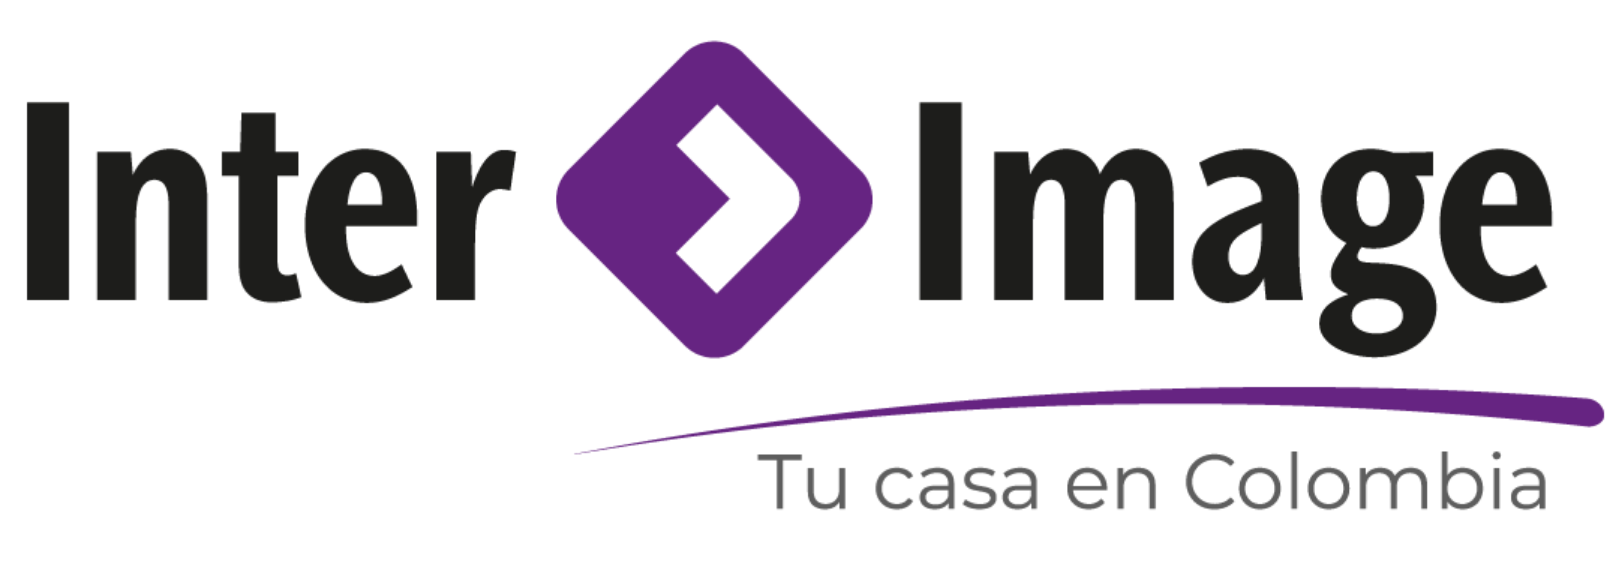 Inter Image - Bancolombia España Reviews